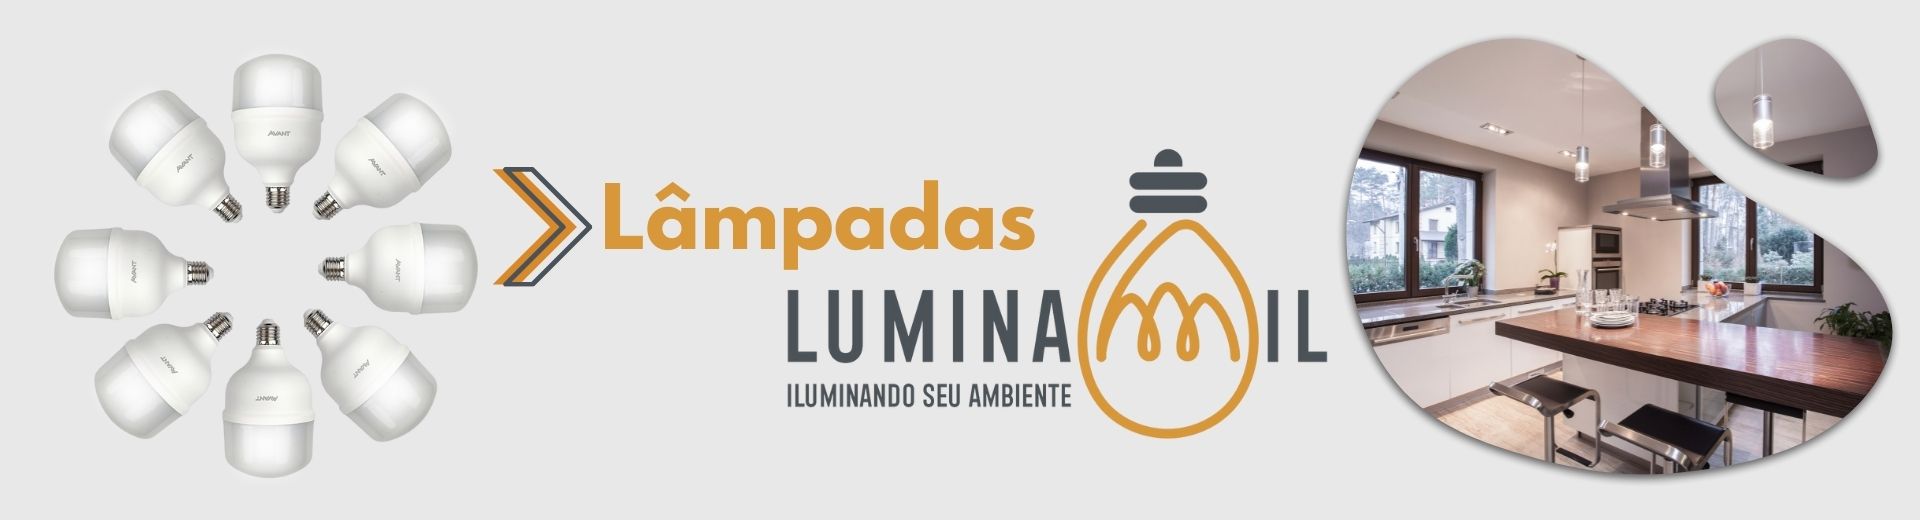 Luminamil - Banner Principal - Lâmpadas